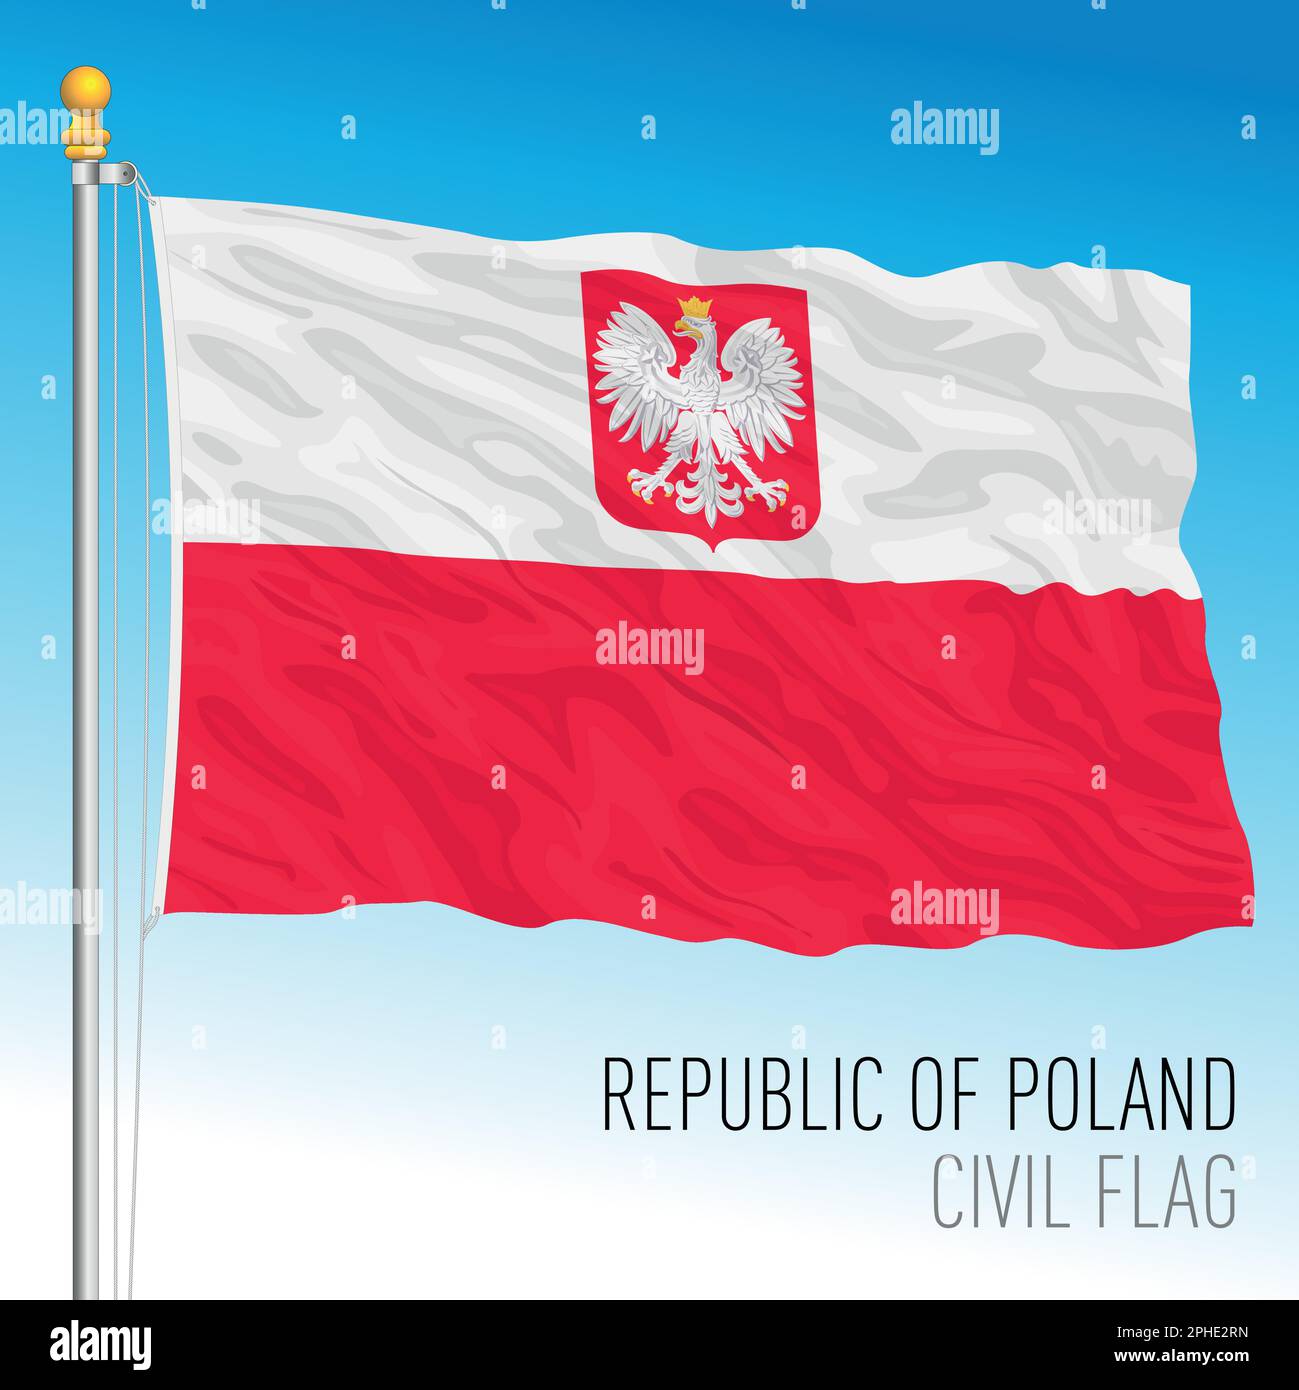 Republic of Poland, Europe, civil flag, vector illustration Stock Vector